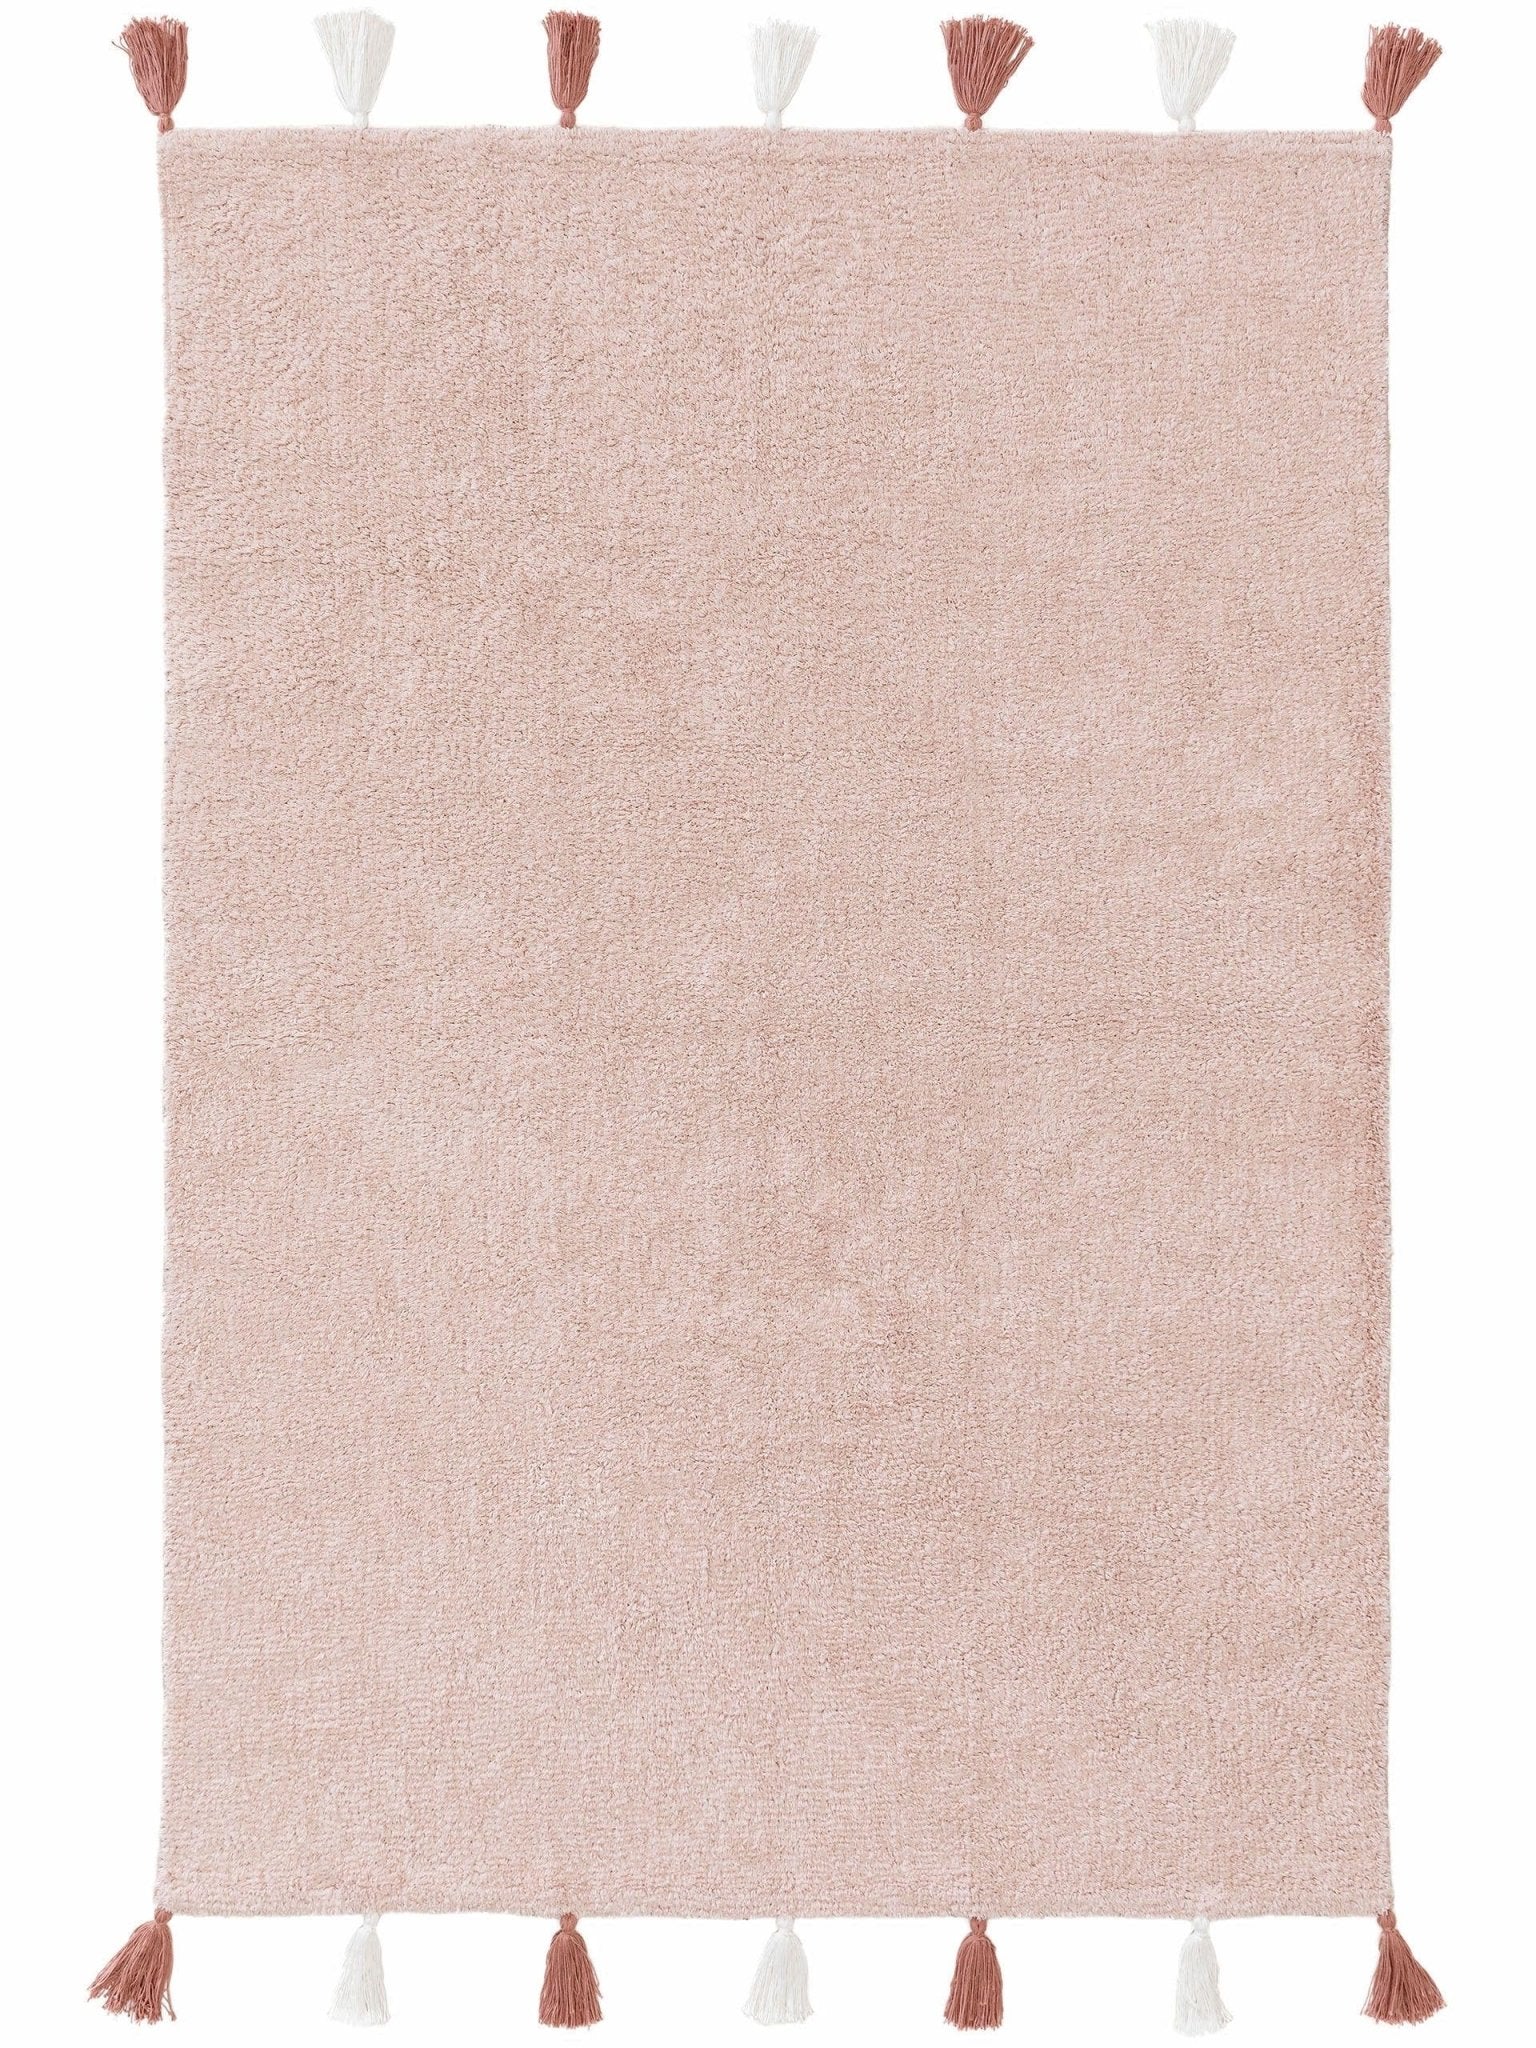 Lytte Teppich Rose / 15x15 cm Waschbarer Kinderteppich Malu